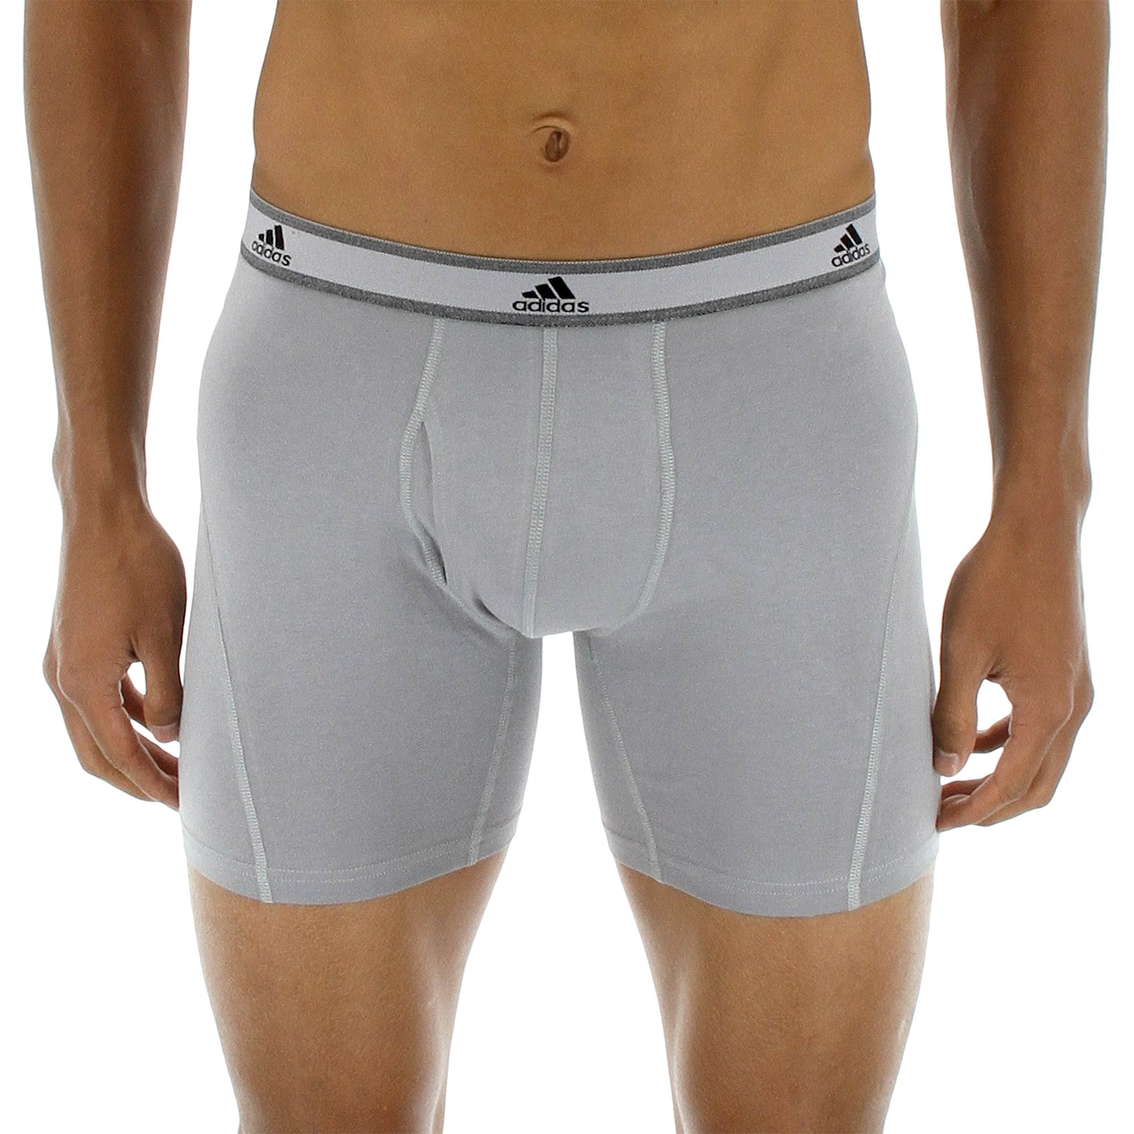 Adidas Relaxed Performance Underwear 2 Pk. | Underwear | Clothing